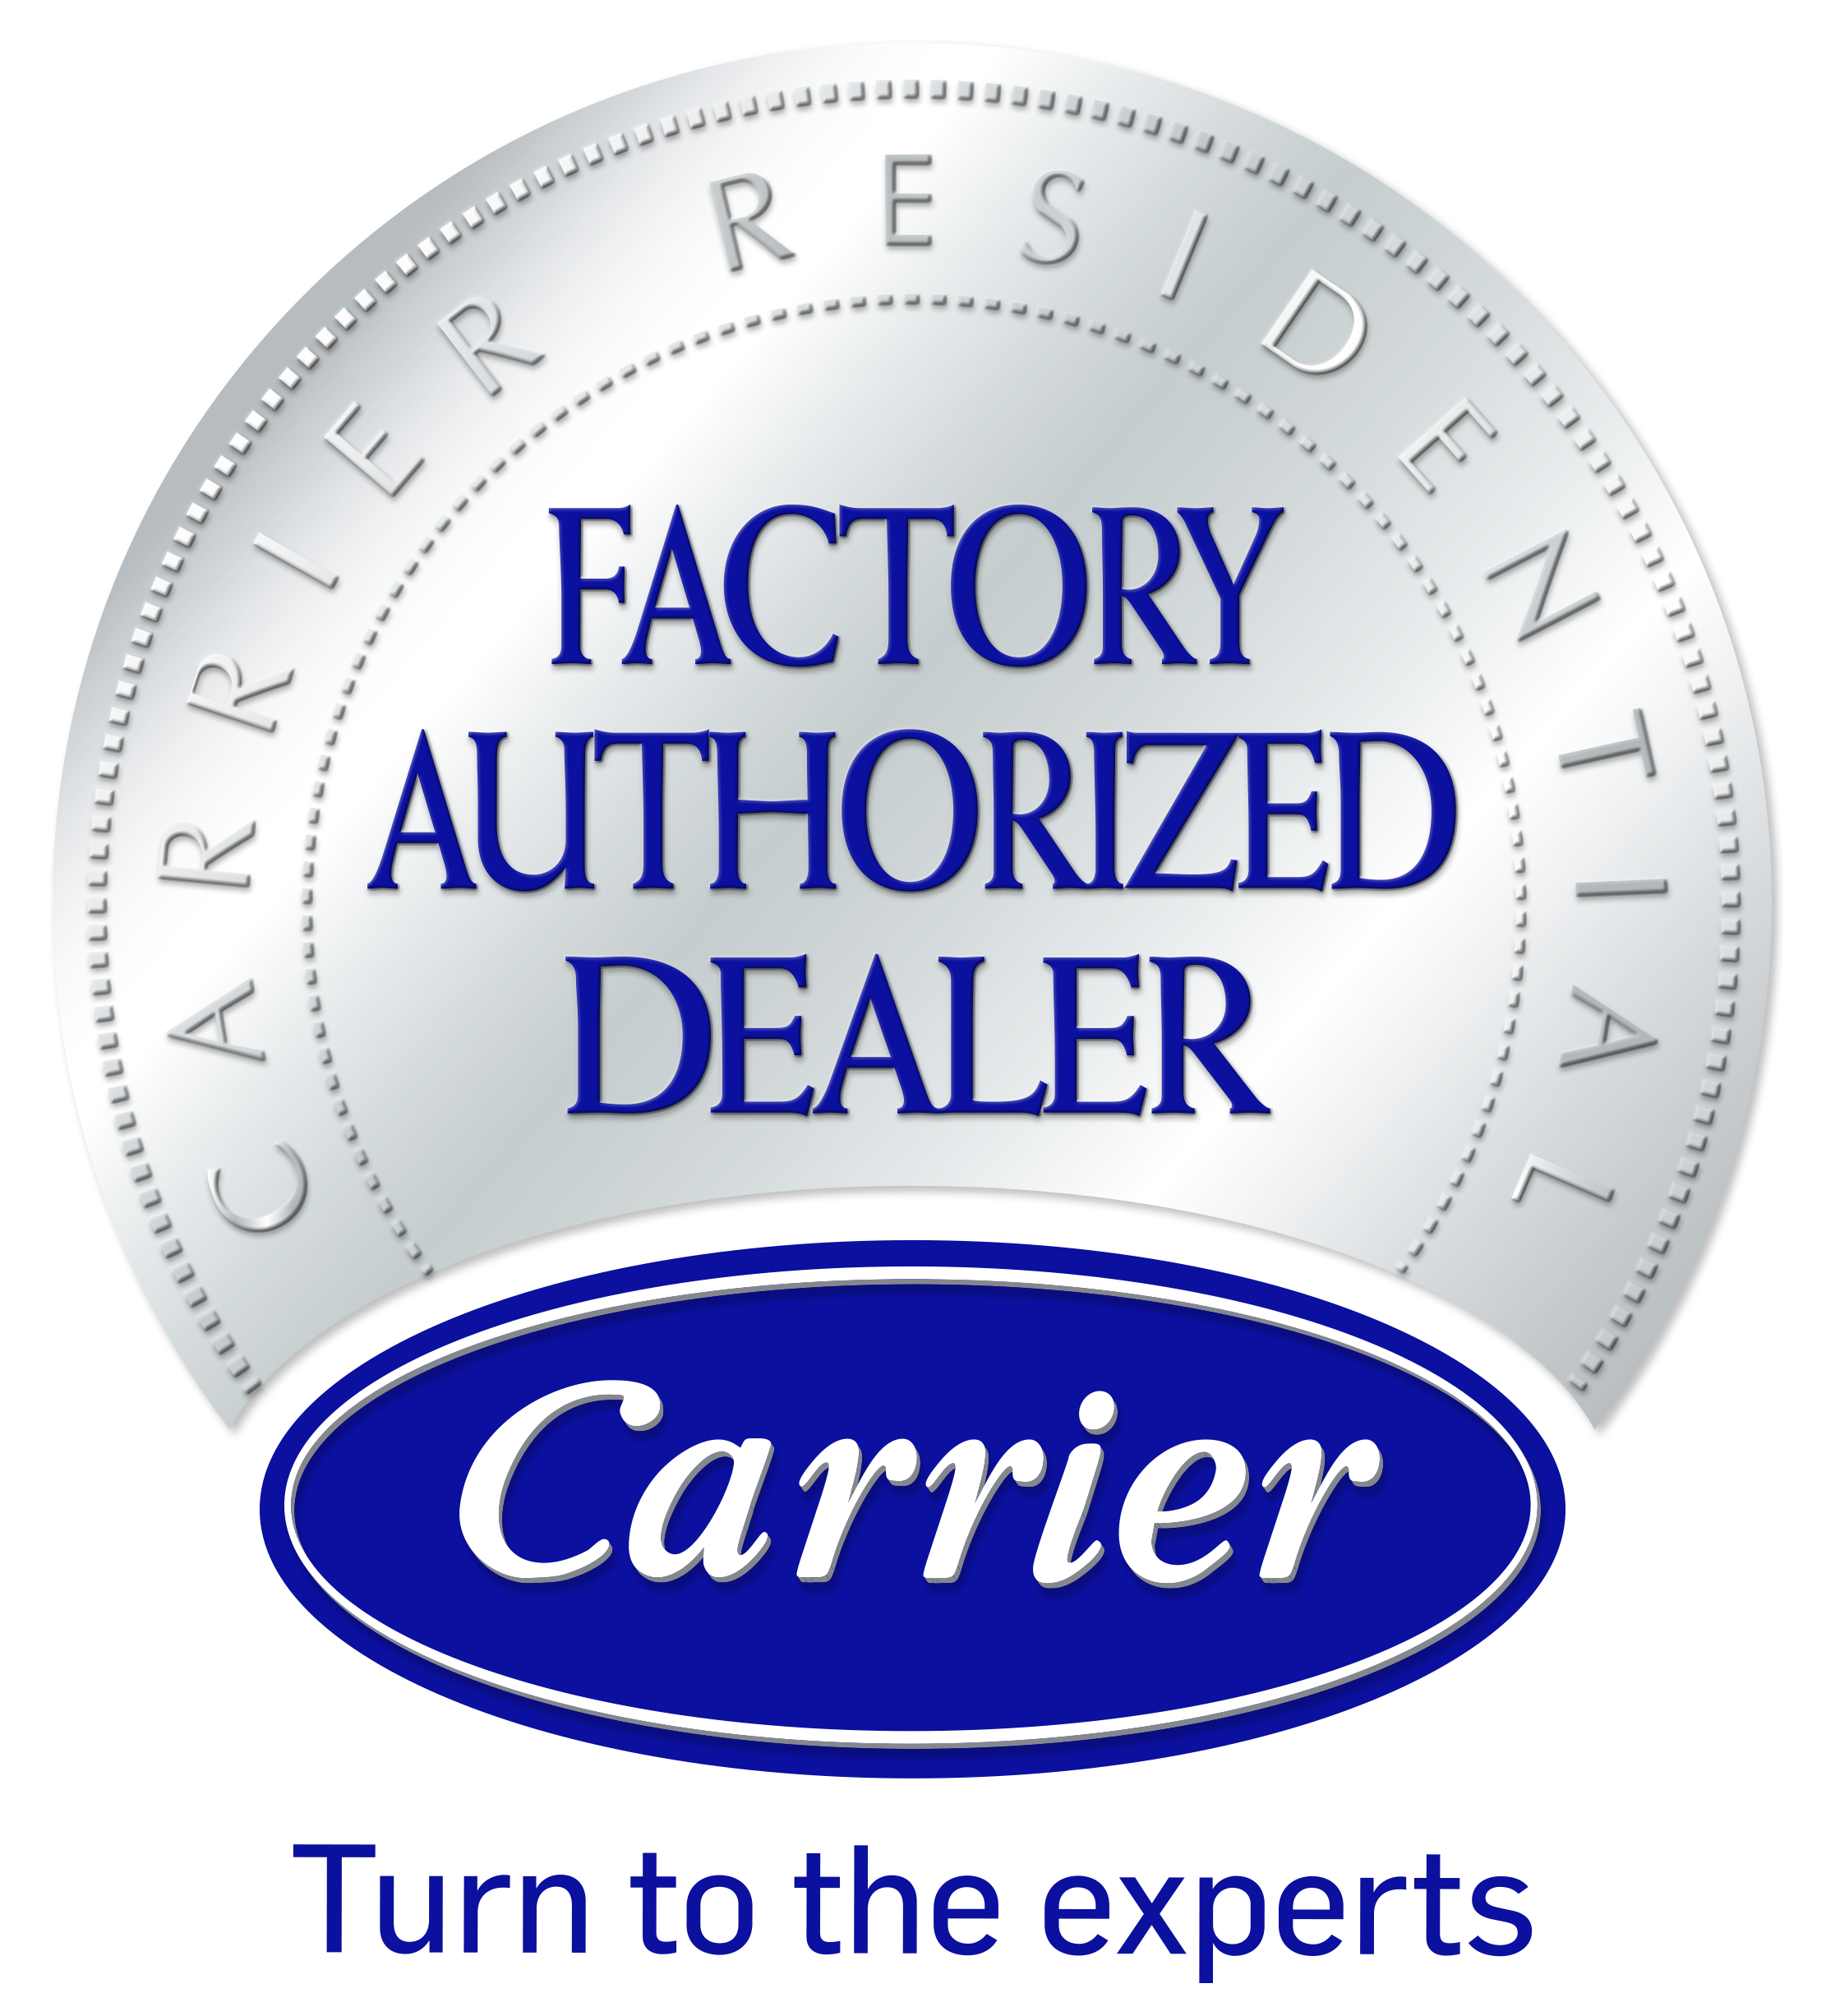 Carrier Authorized Dealer logo